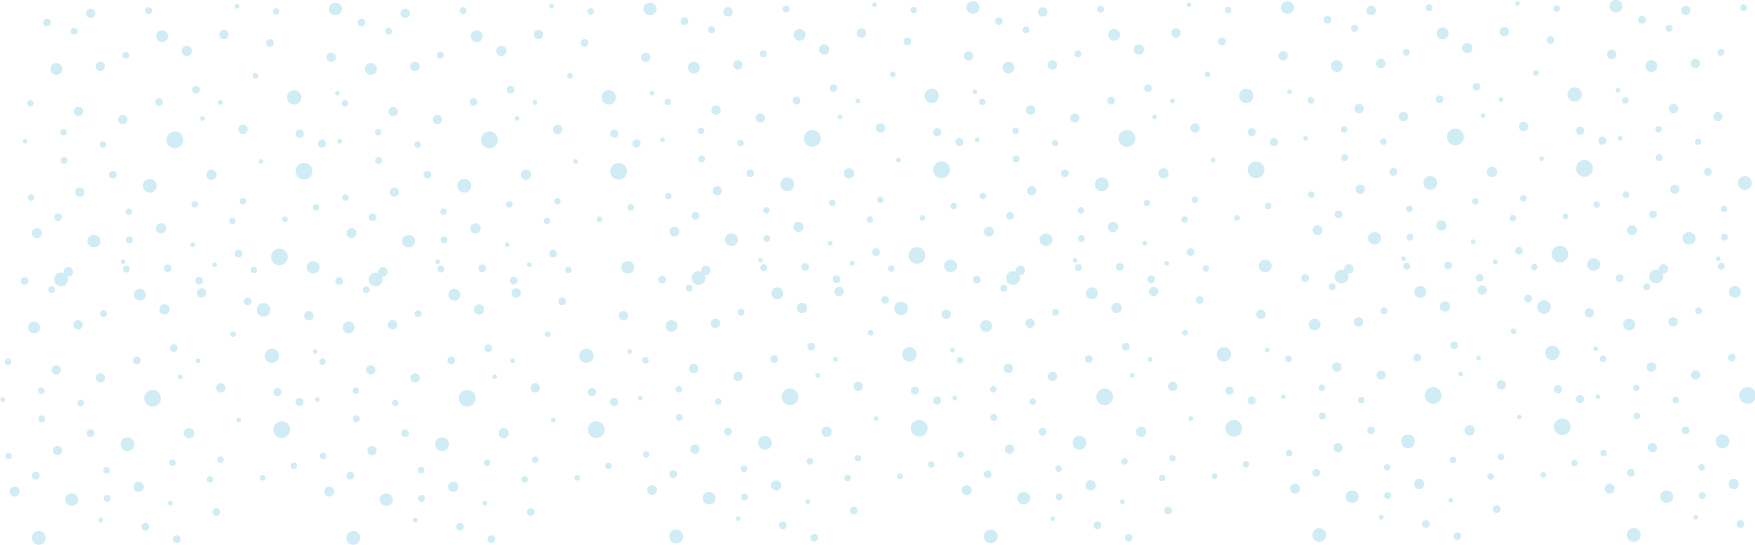 Snow No Background Clip Art